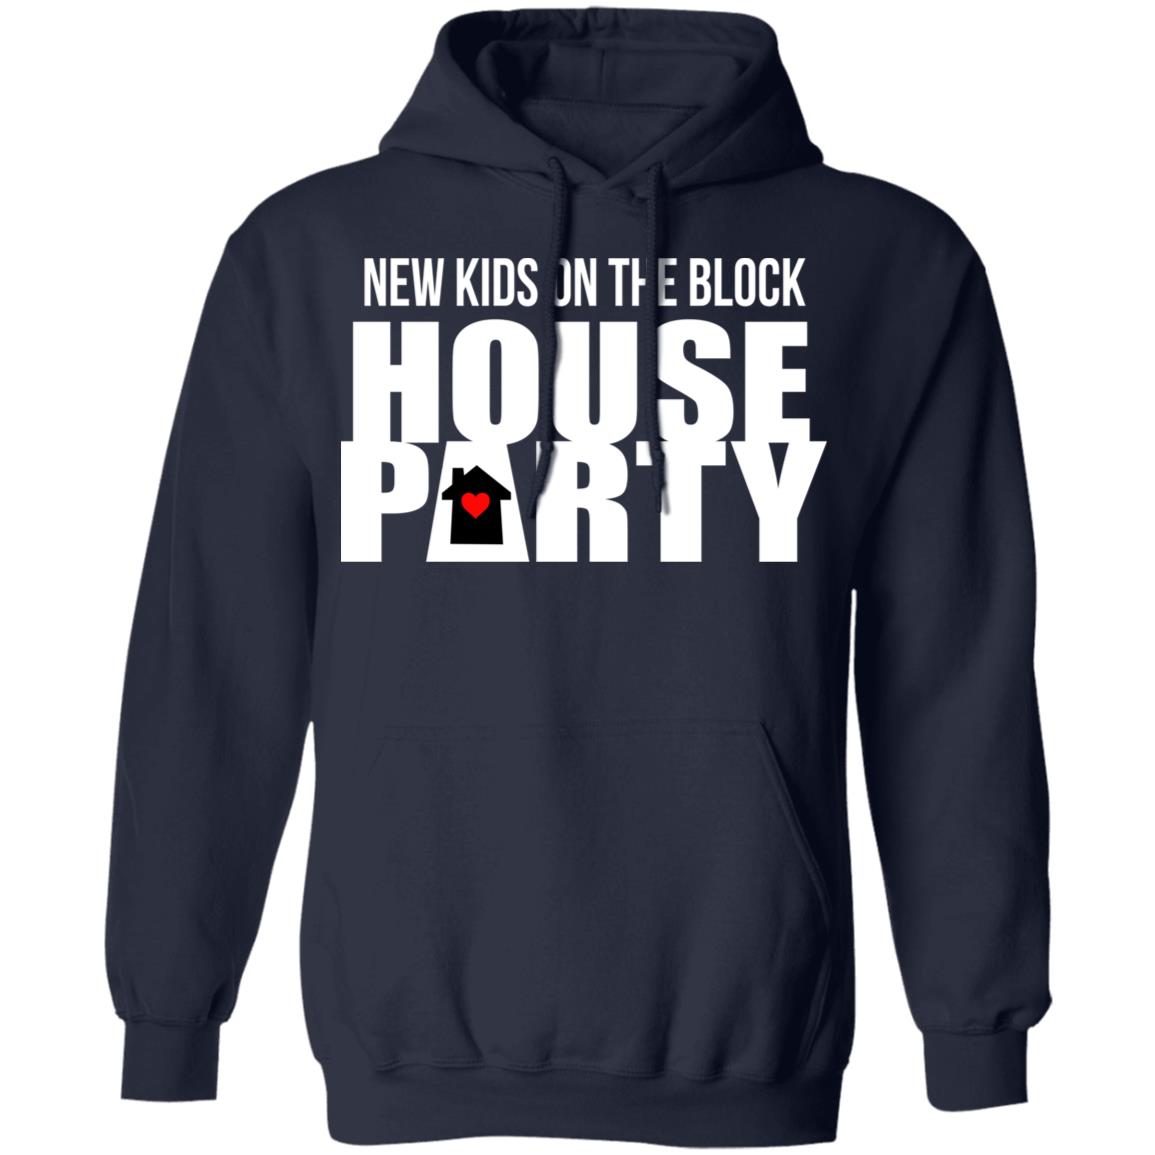 White Nkotb House Party shirt